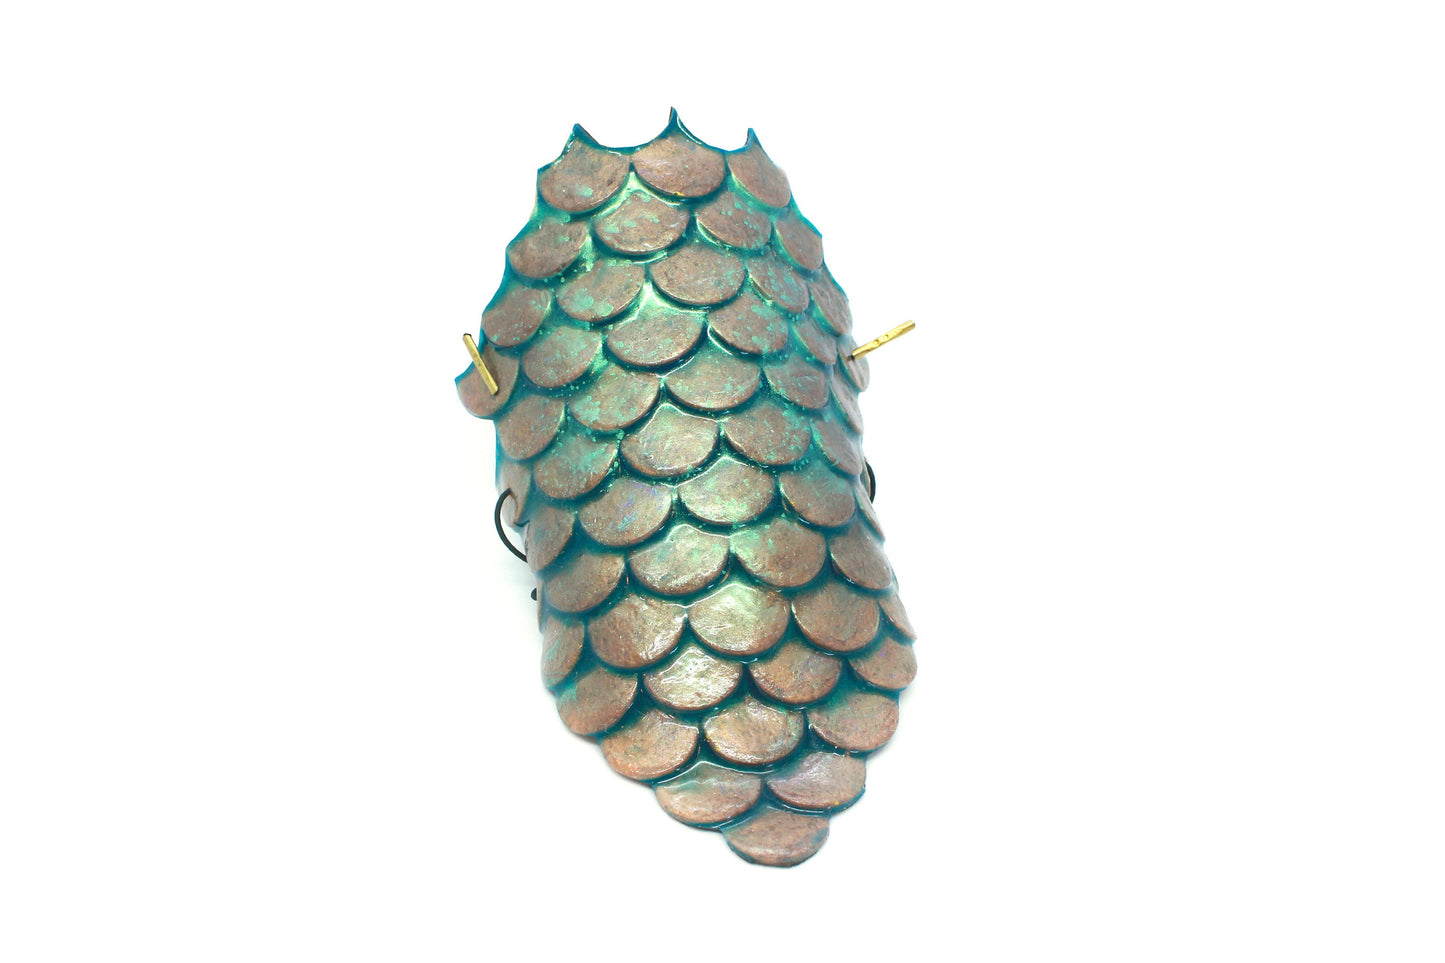 Silicone mermaid/fish scales bracelet